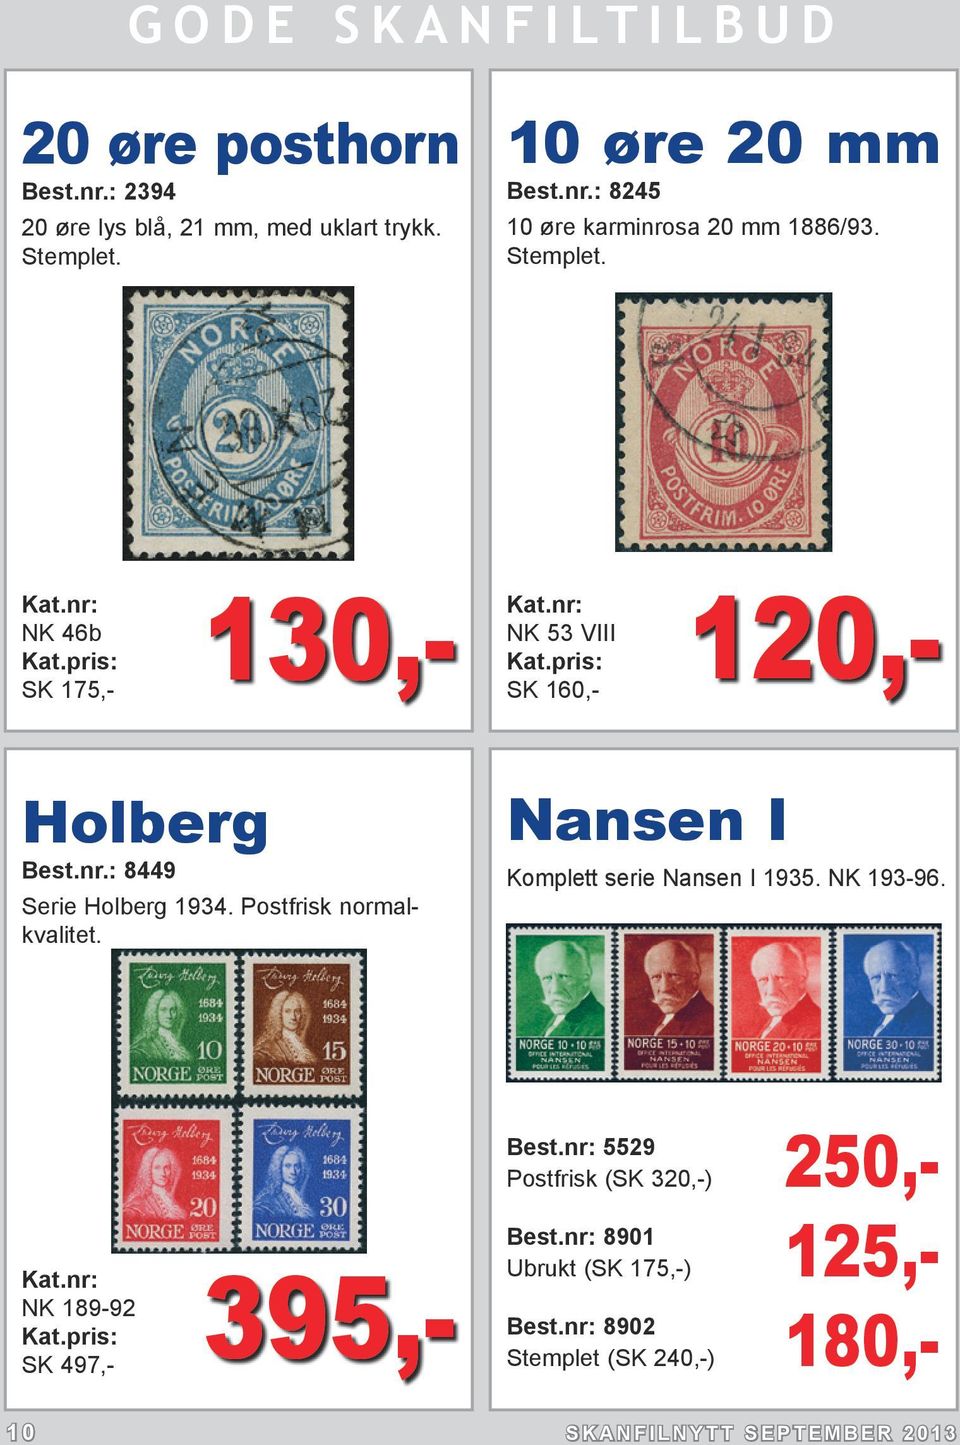 NK 189-92 SK 497,- Holberg Best.nr.: 8449 Serie Holberg 1934. Postfrisk normalkvalitet. 395,- Best.